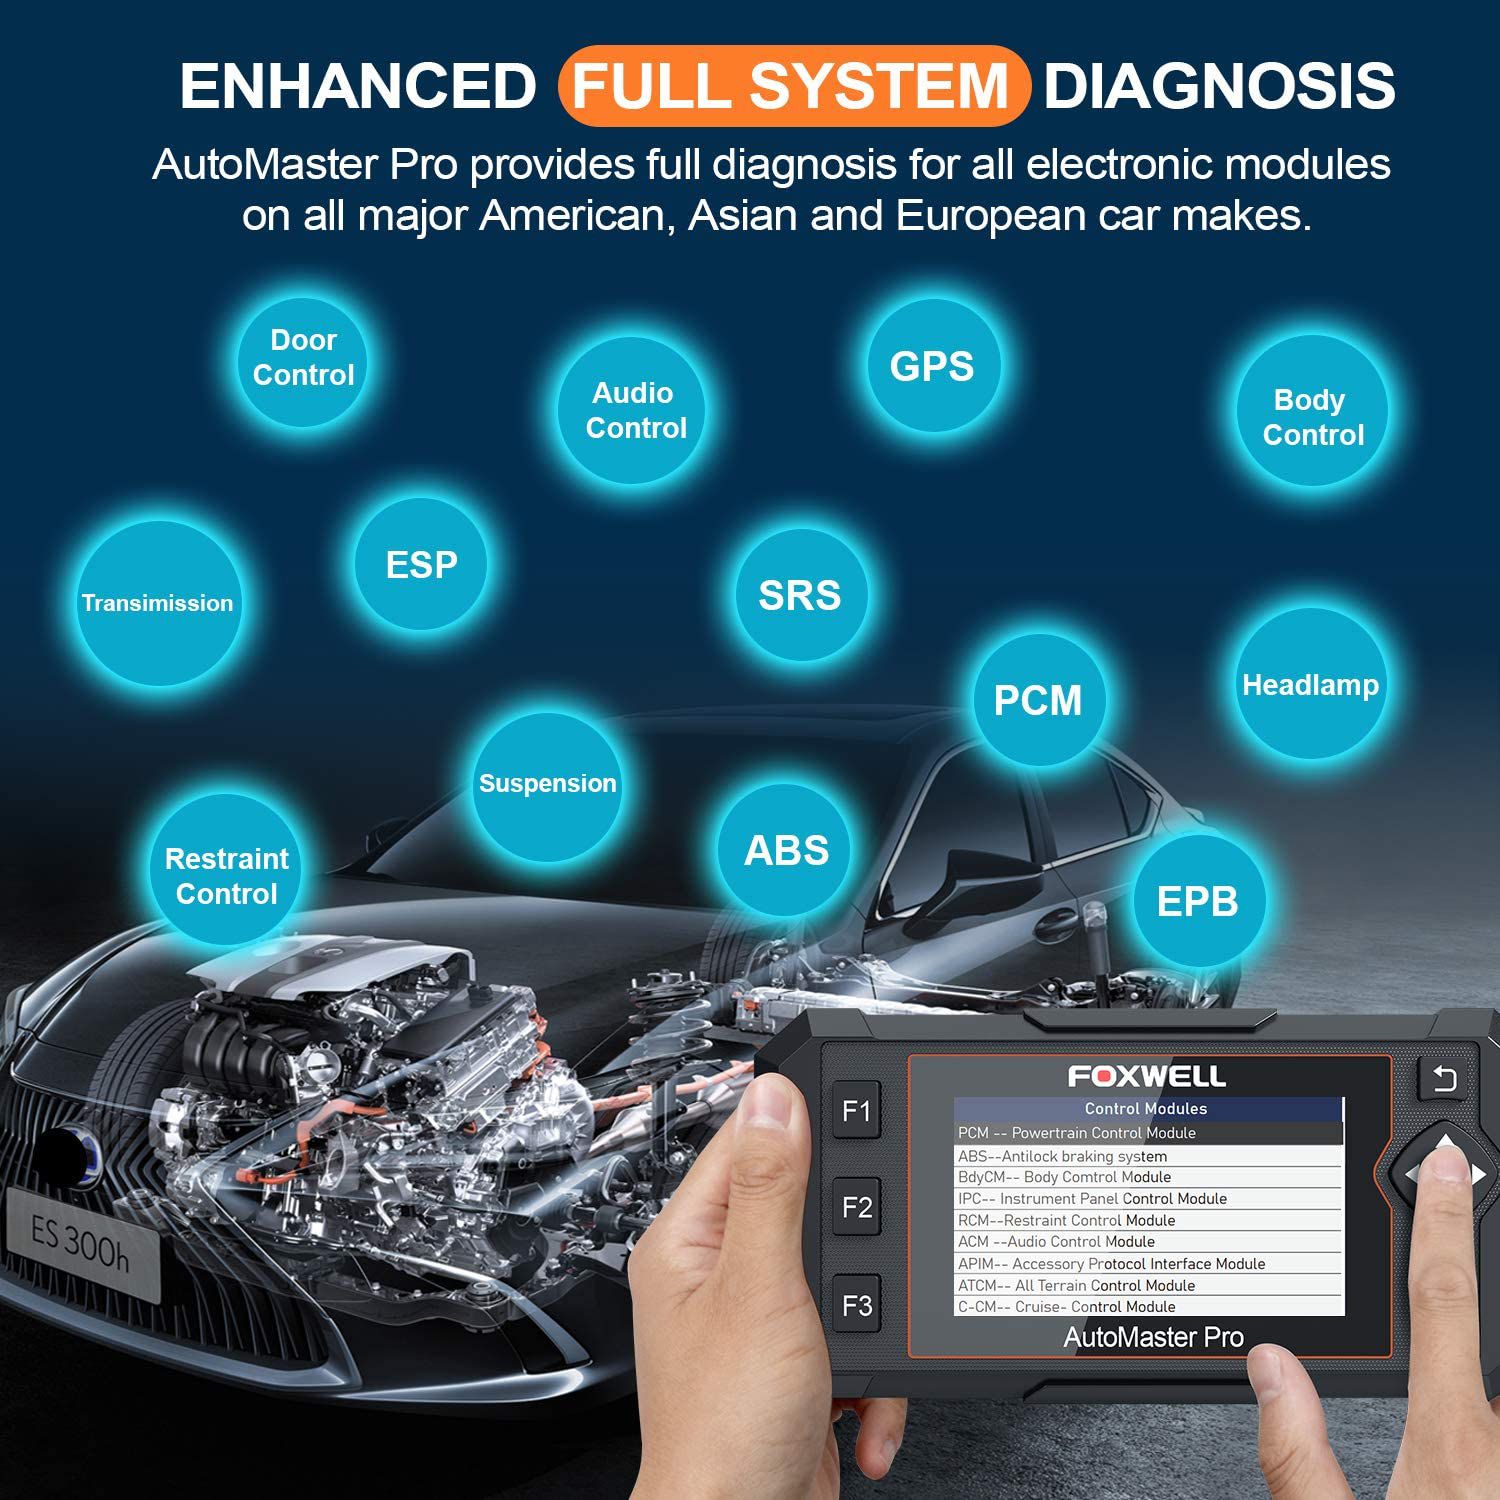 Foxwell NT624 Elite OBD2 Scanner Full System OBD2 Automotive Scanner EPB Oil Reset Diagnostic Tool Car Accessories Kostenlose Aktualisierung